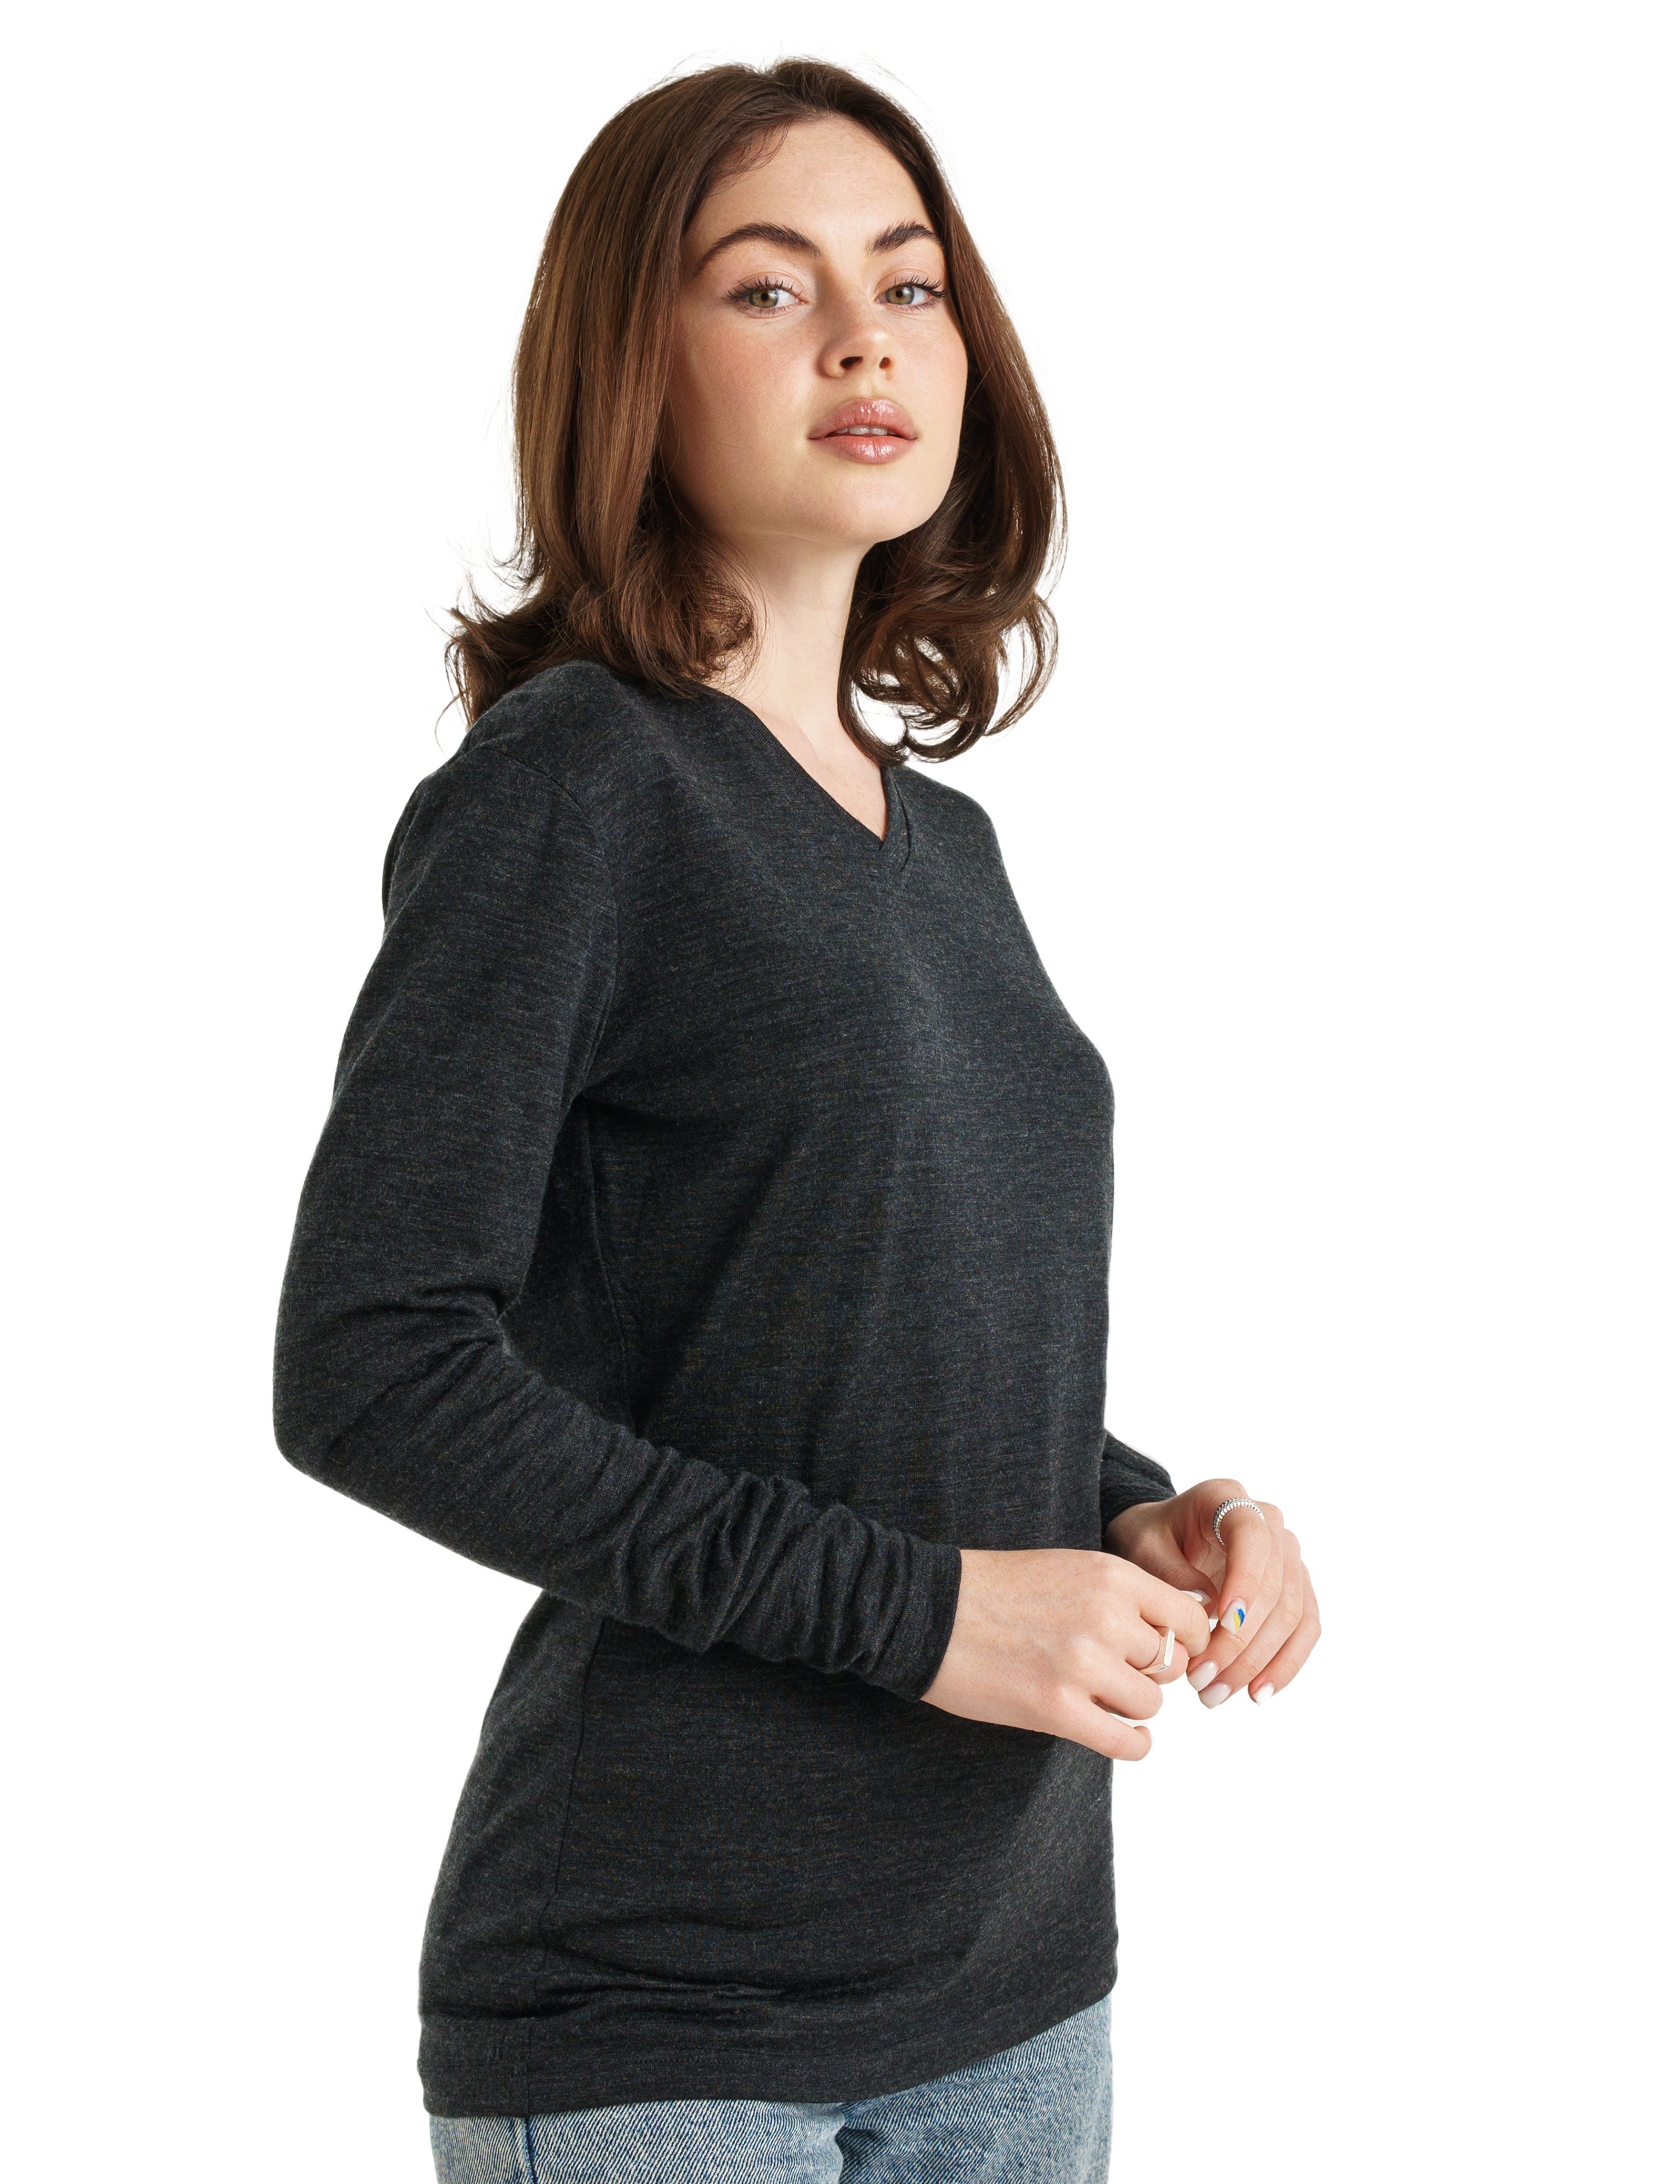 Merino Wool Long Sleeve (Charcoal V-neck) Thermal Base Layer Underwear -  Lightweight